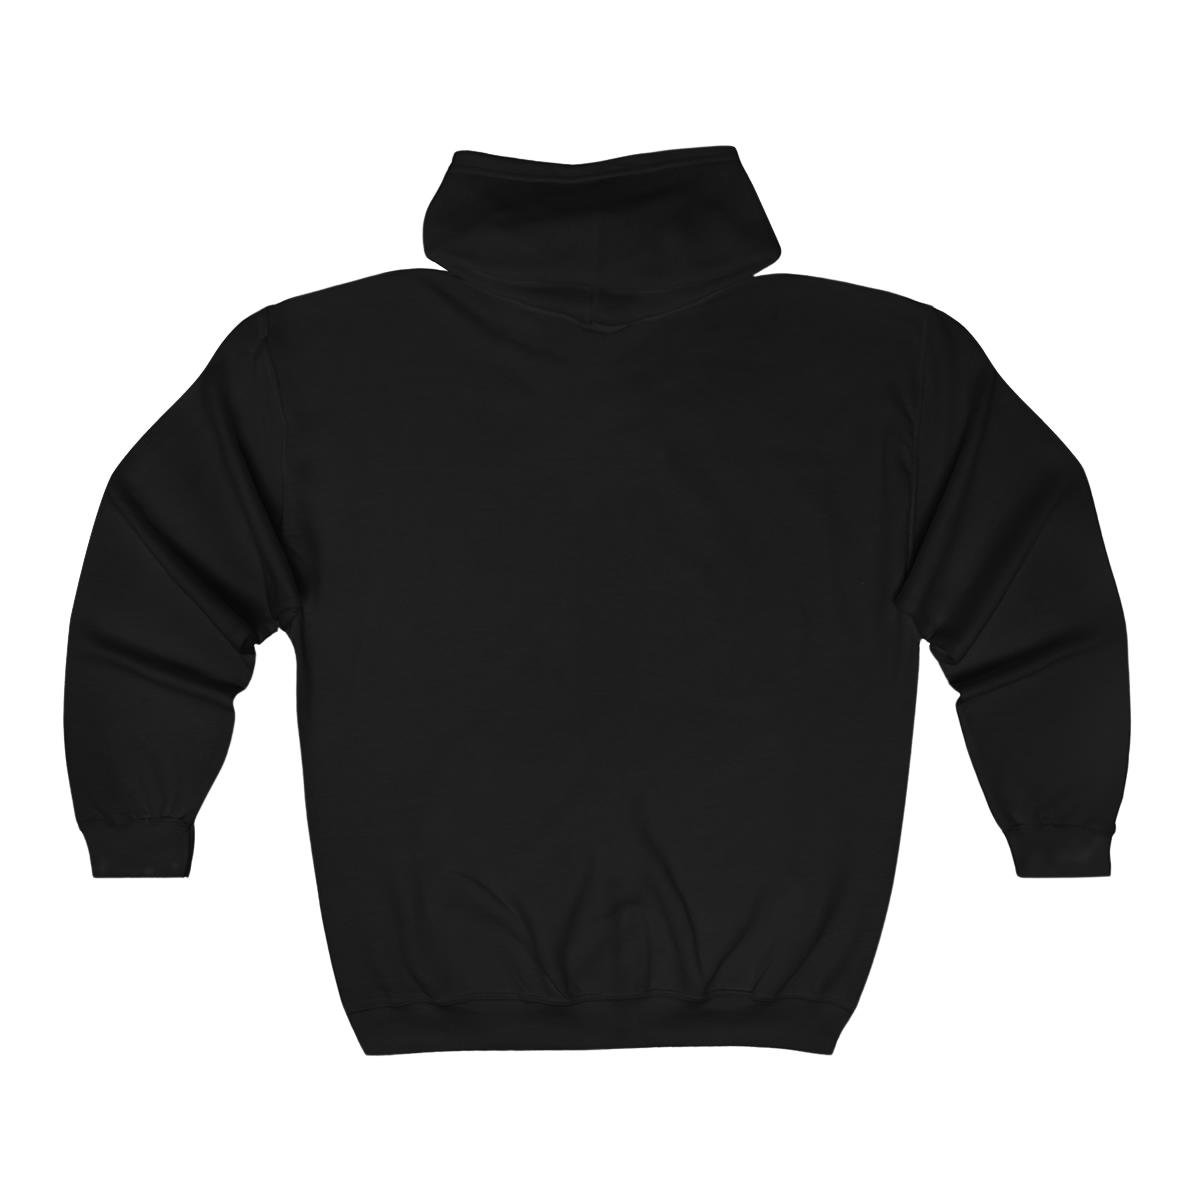 XIII Minutes – Obsessed (Dead Bird Version) Full Zip Hooded Sweatshirt